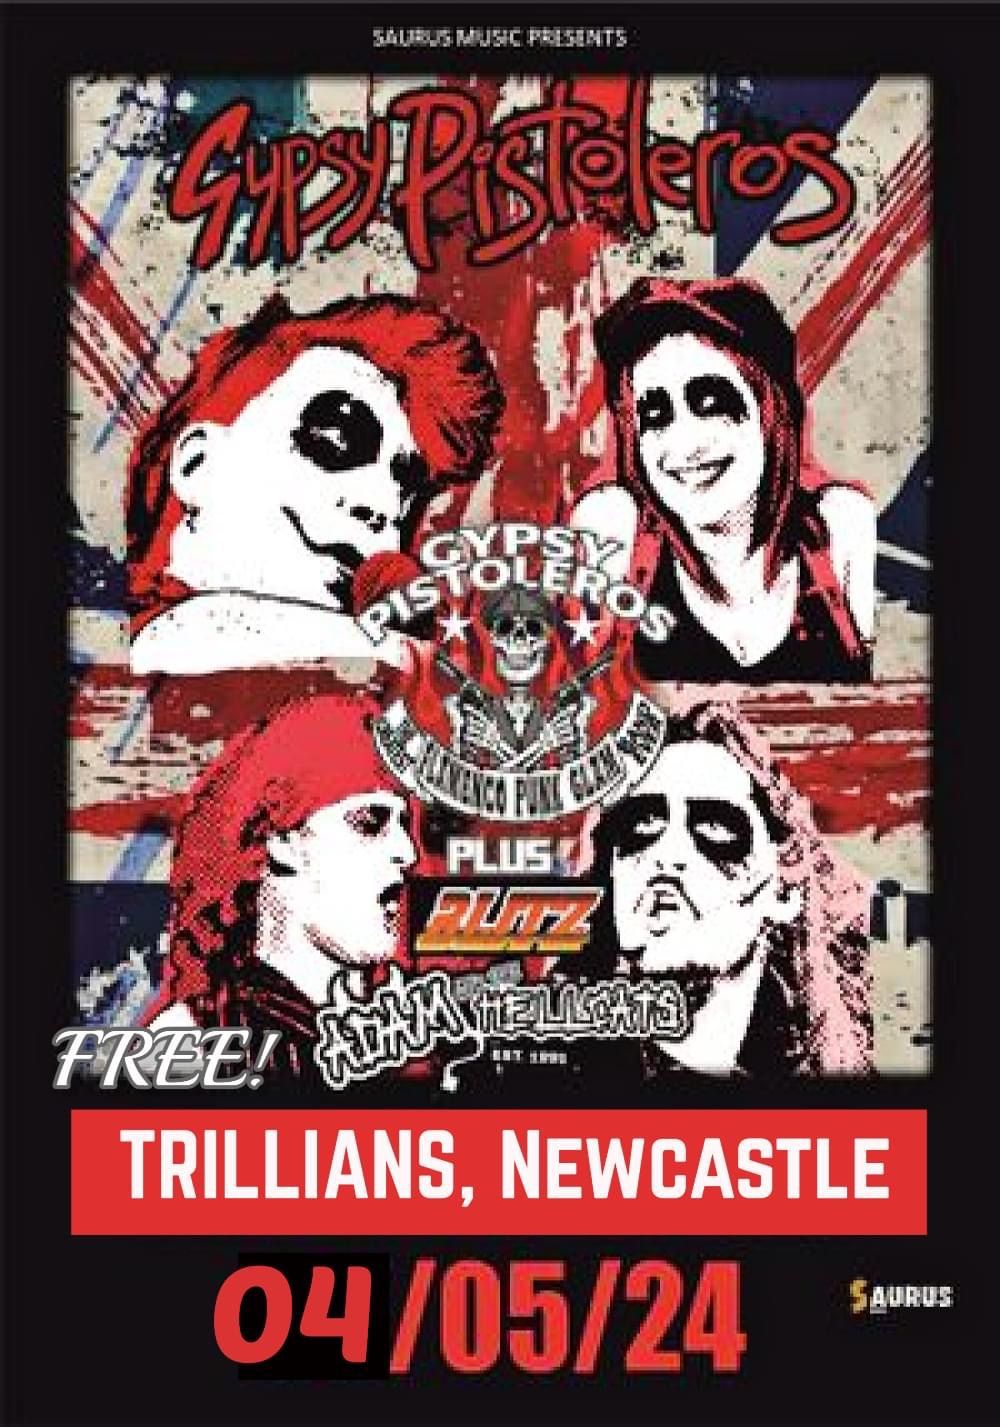 Gypsy Pistoleros + Adam & The Hellcats + Blitz @ Trillians, Newcastle